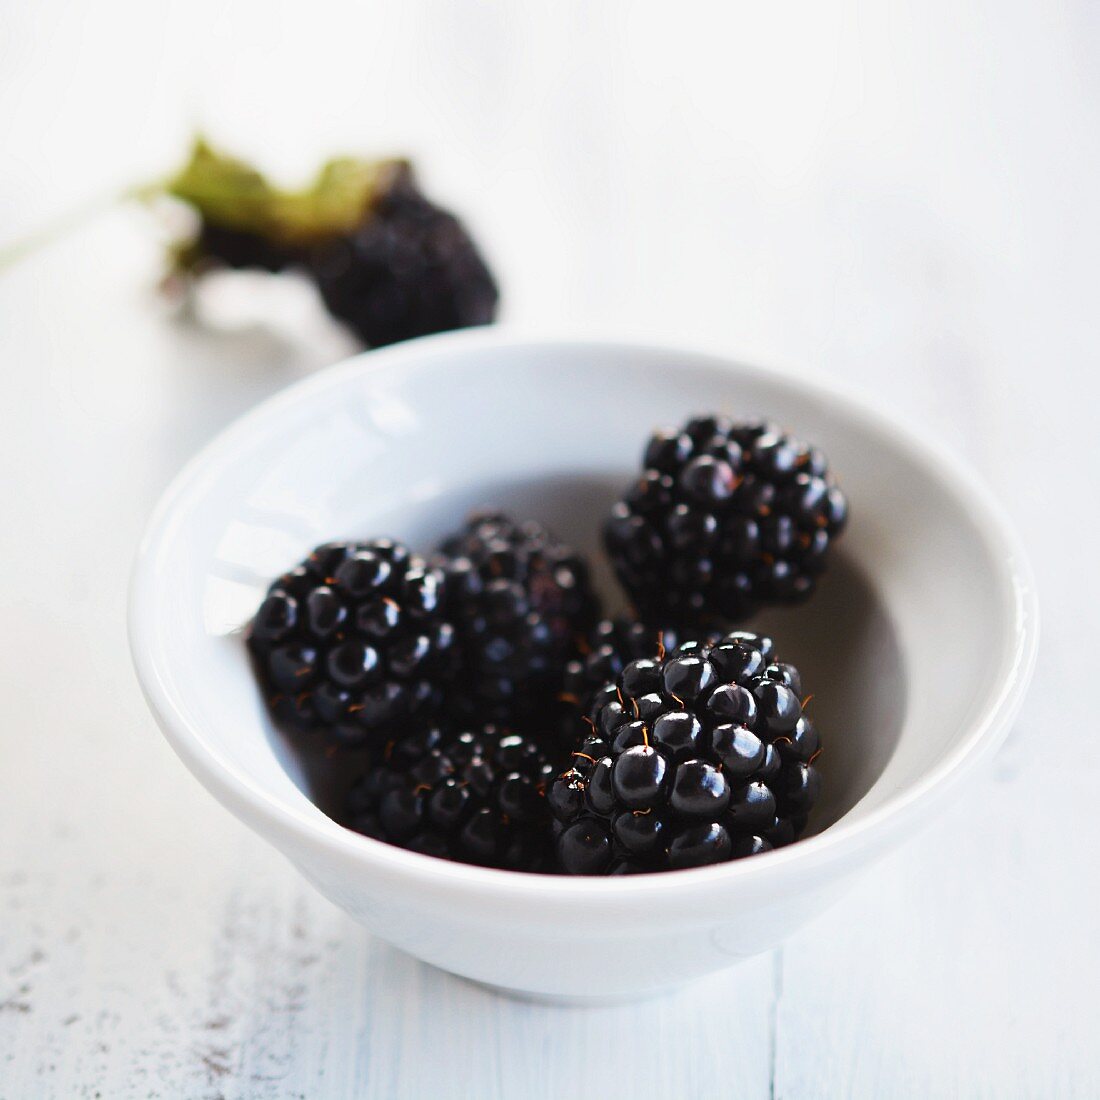 A bowl of fresh blackberries